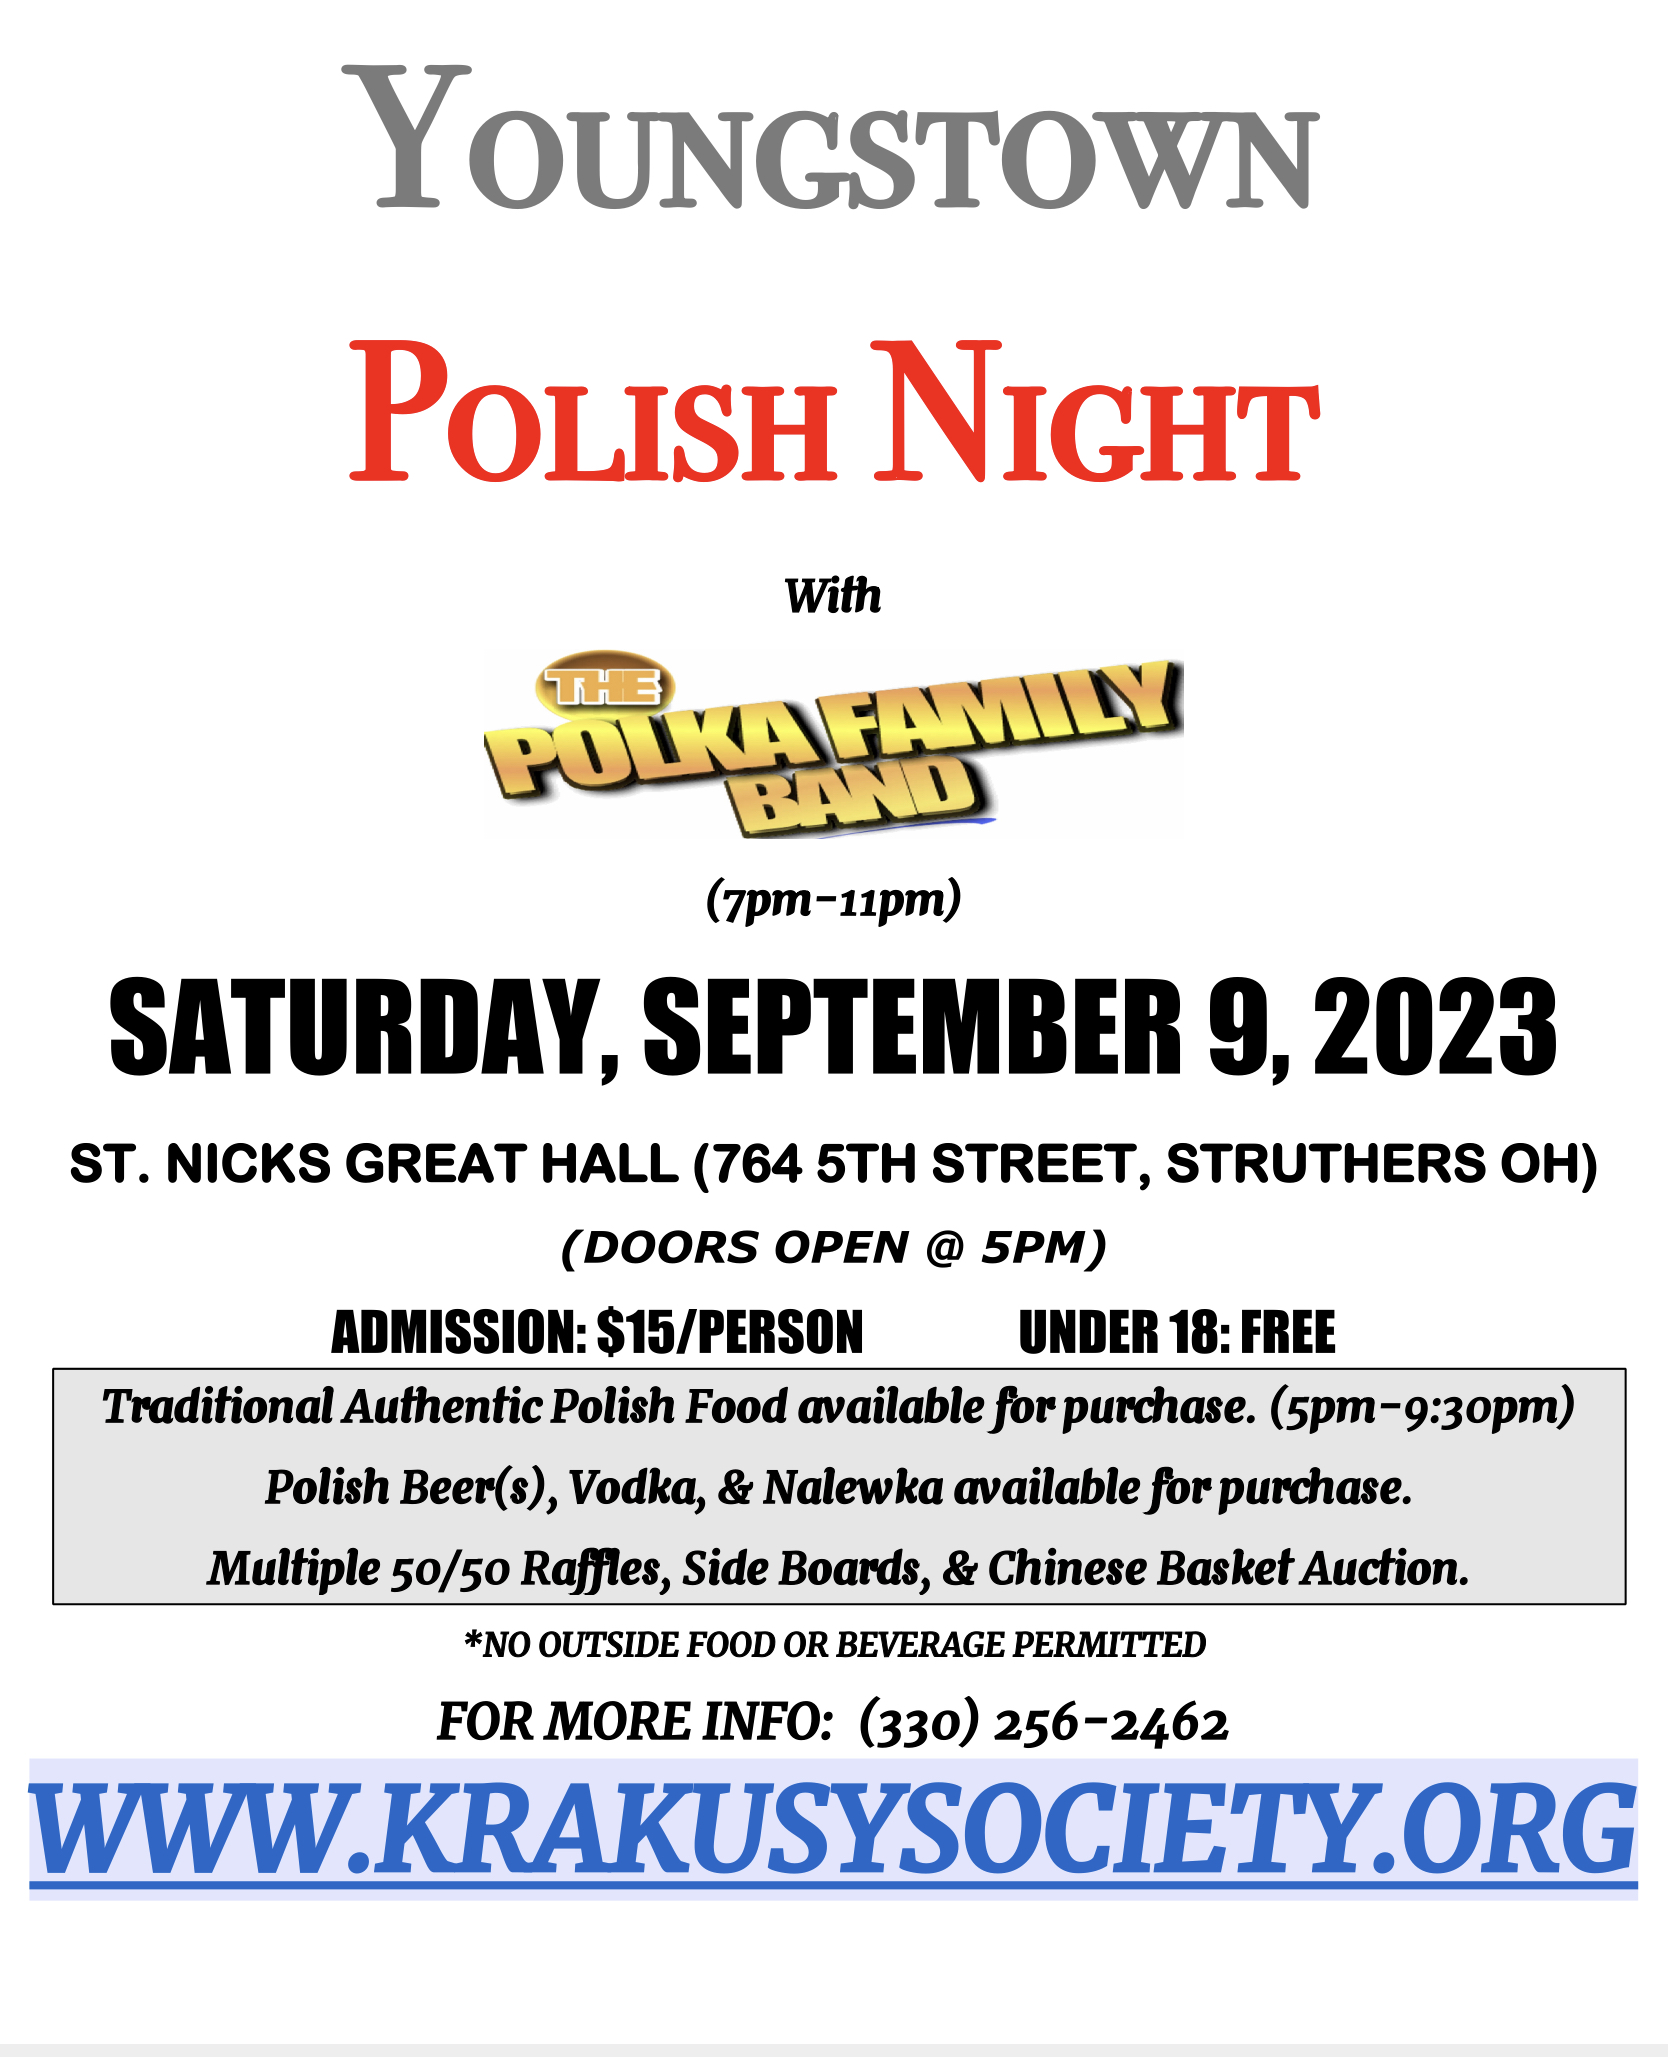 Youngstown Polish Night